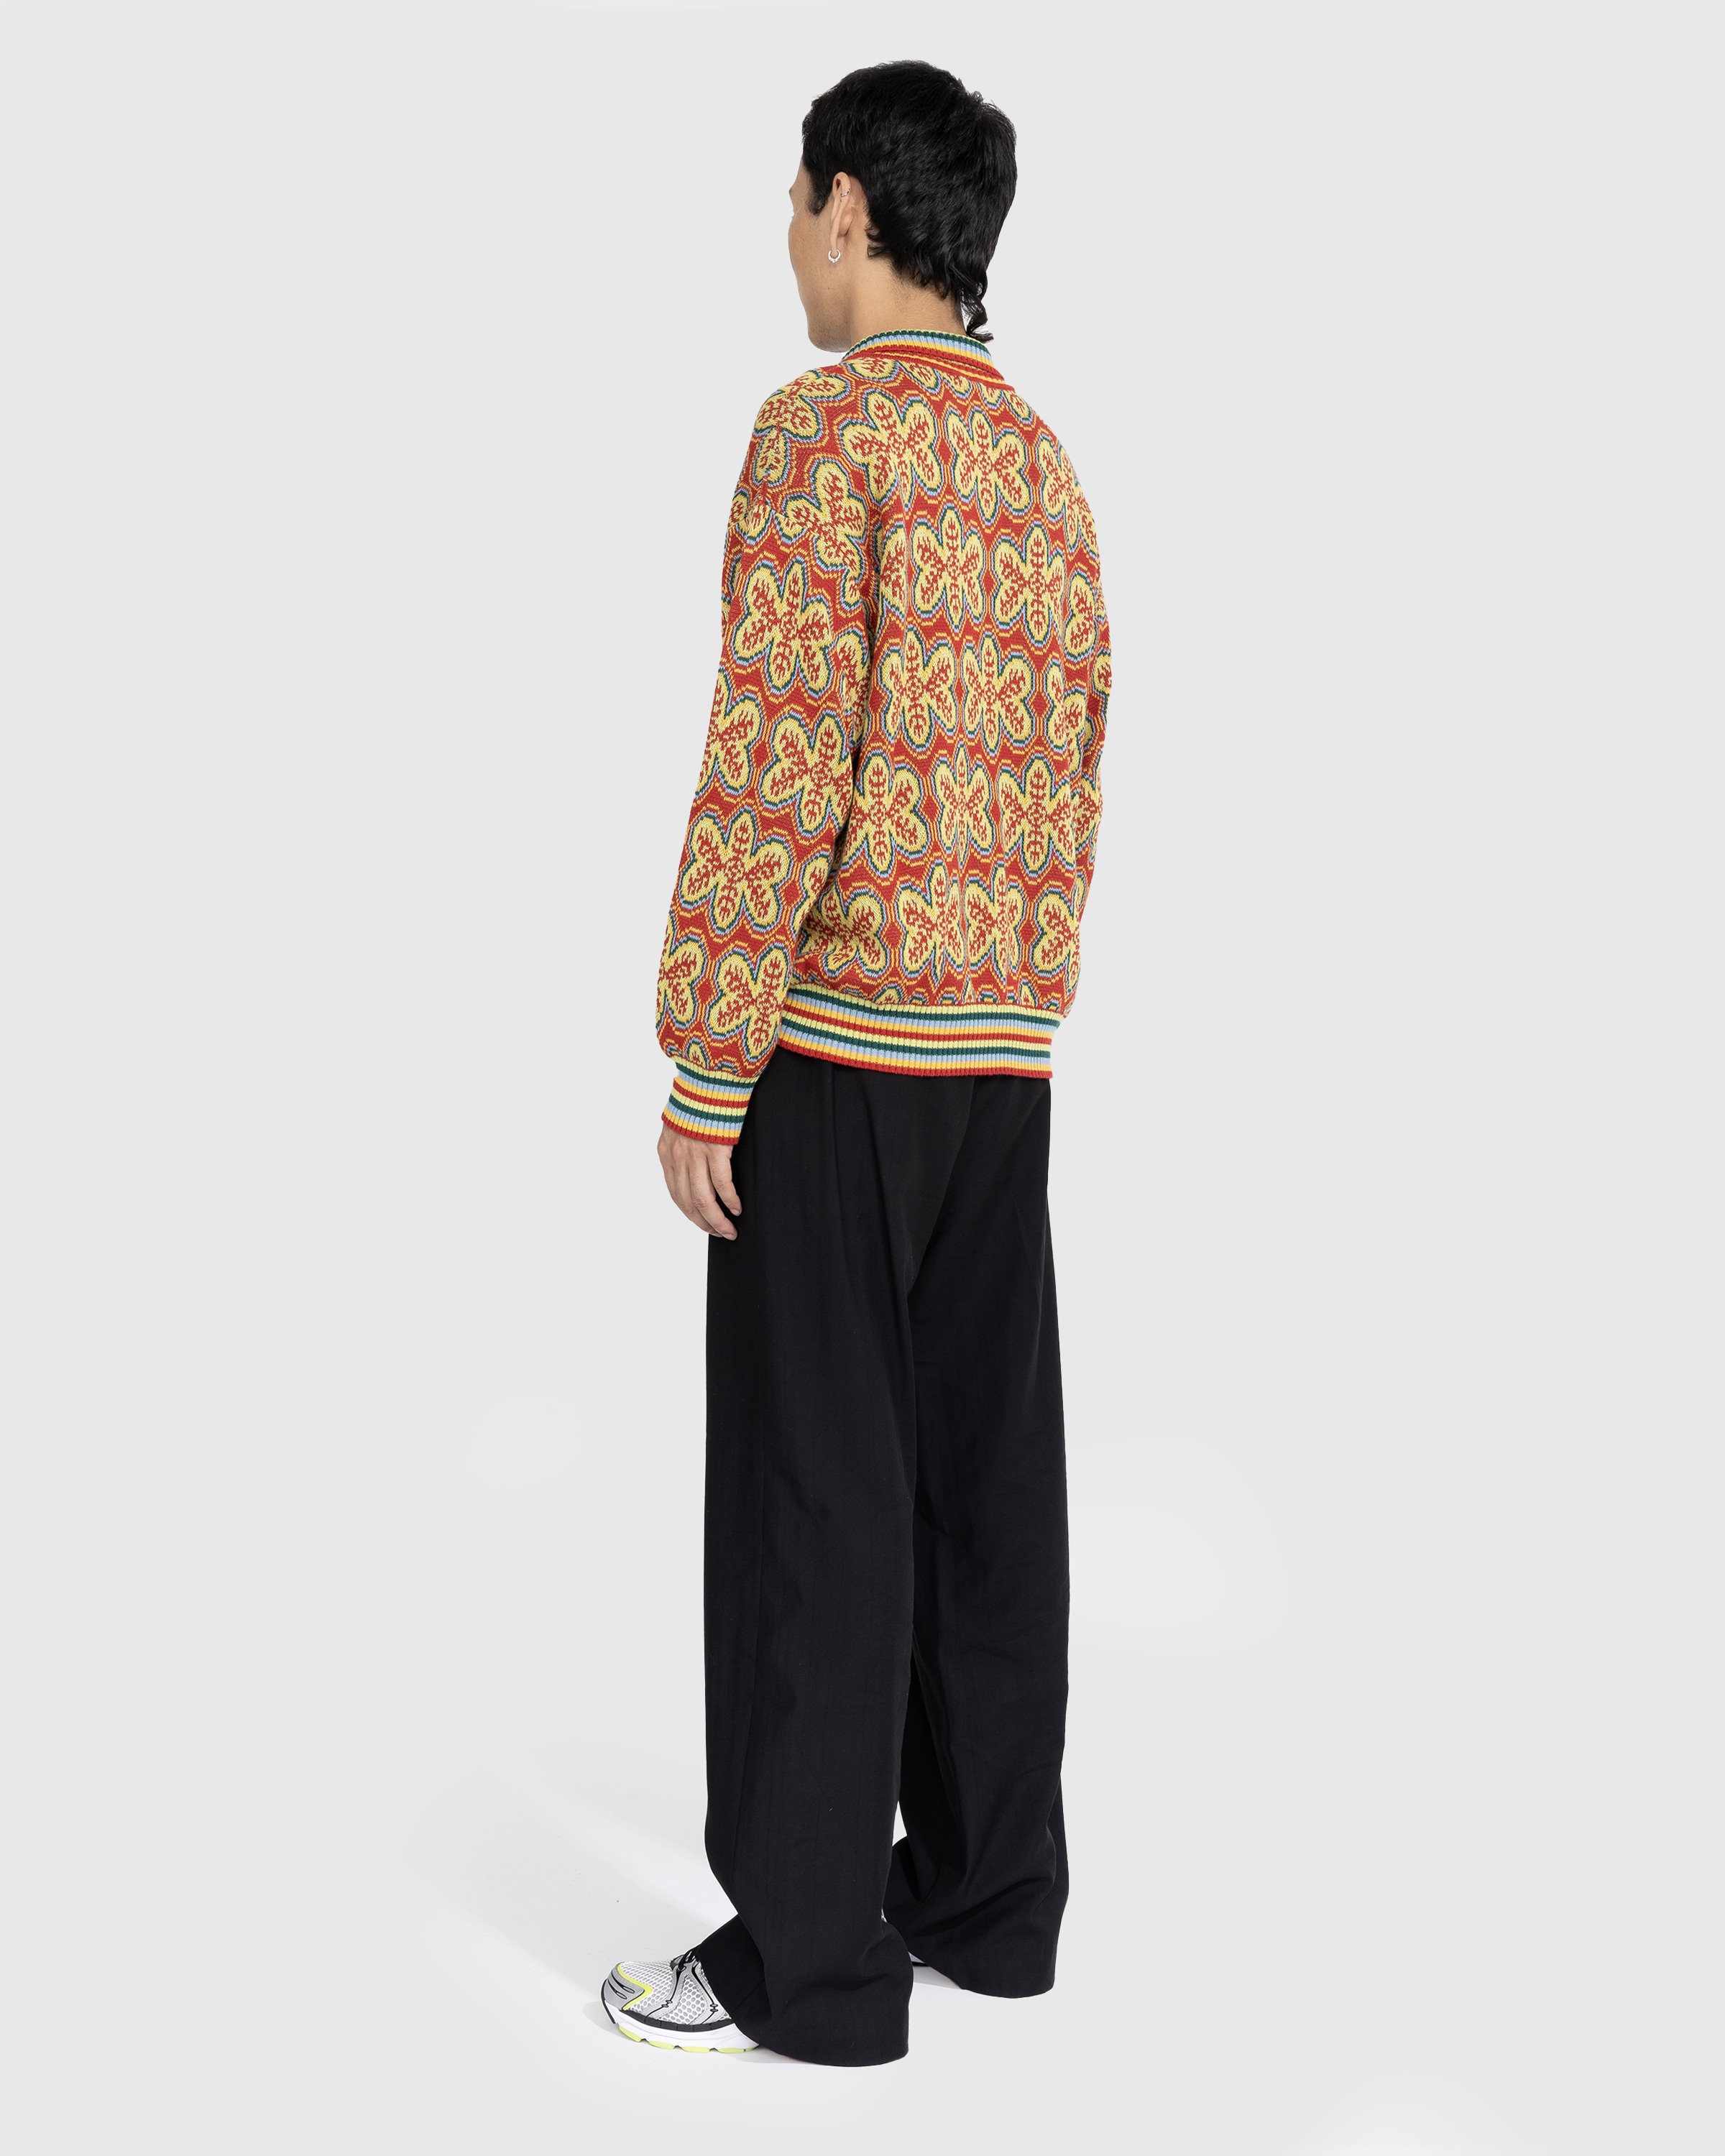 Bode - Dream State Quarter-Zip Sweater Multi - Clothing - Multi - Image 3